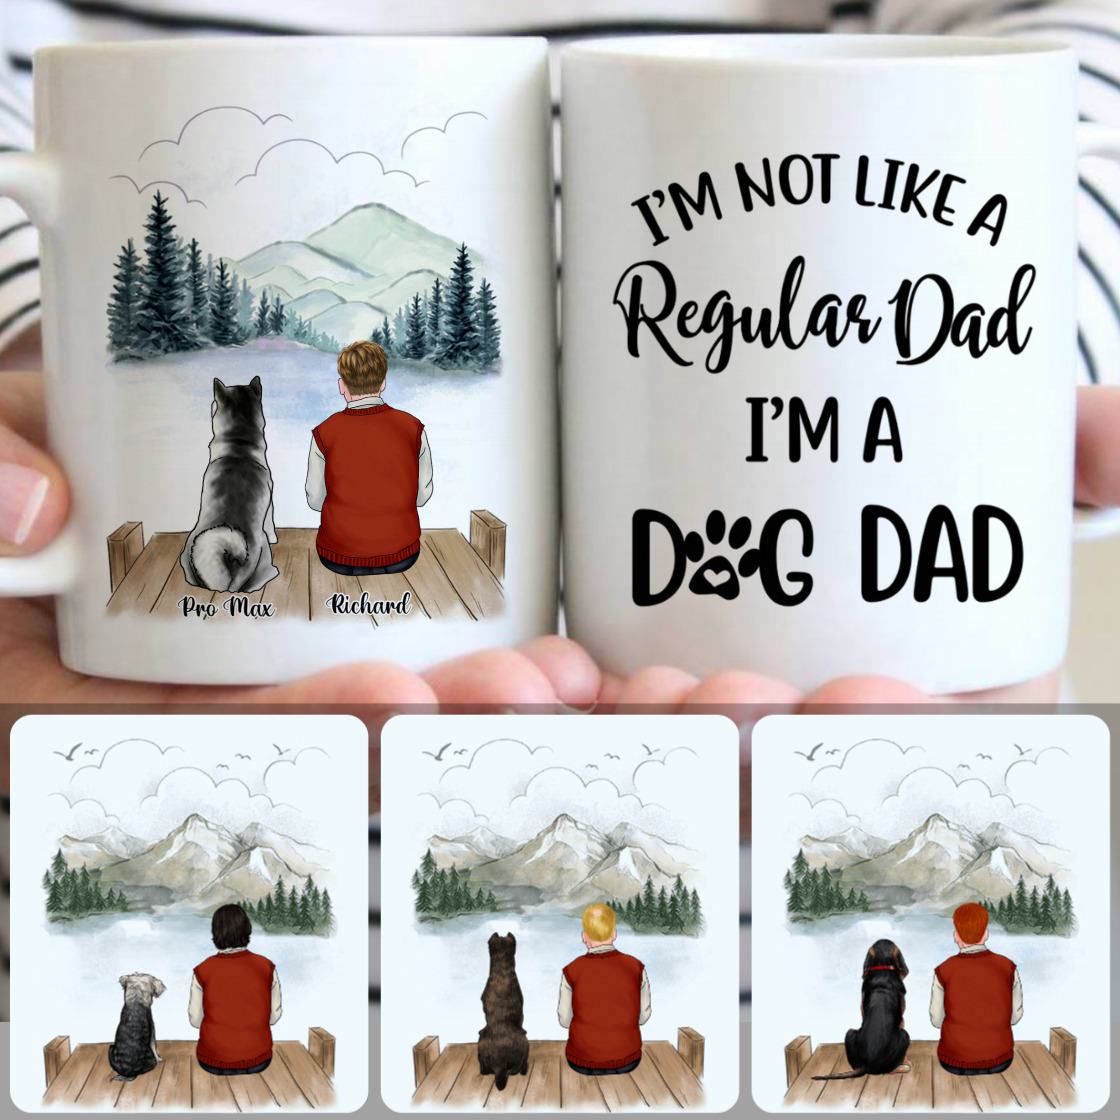 Personalized Mug, Memorial Birthday Gifts, Old Man & Dog Customized Coffee Mug With Names